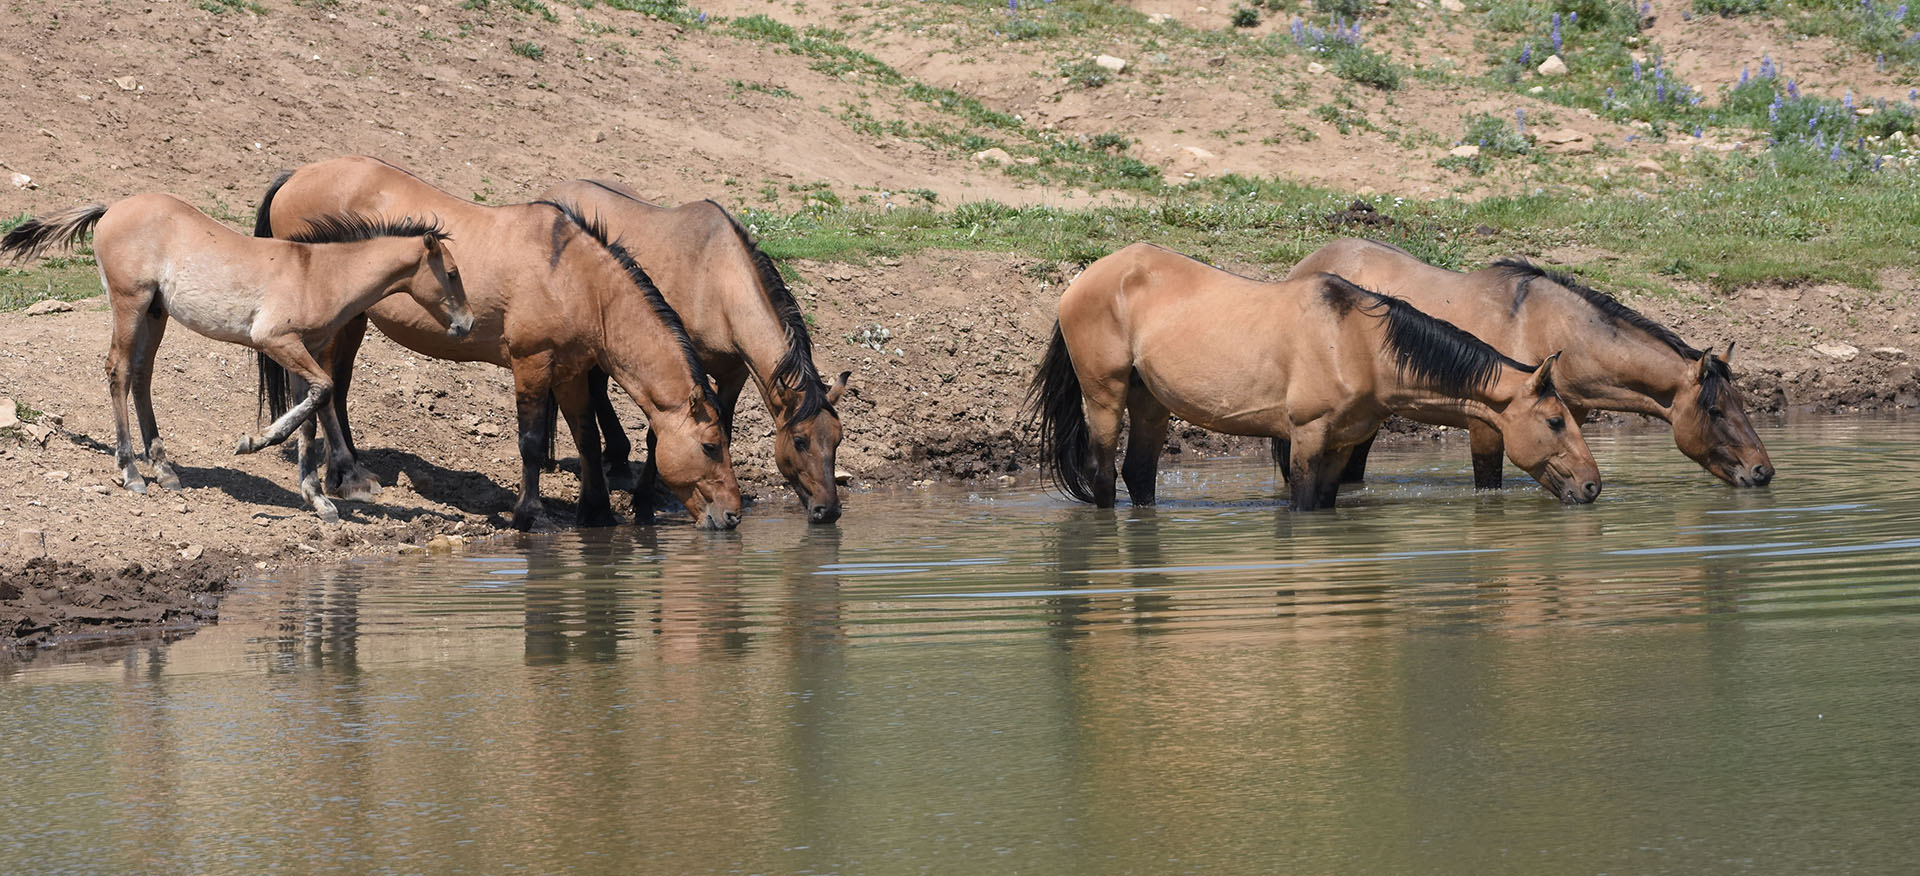 The Pryor Mountain Wild Horses are unique.